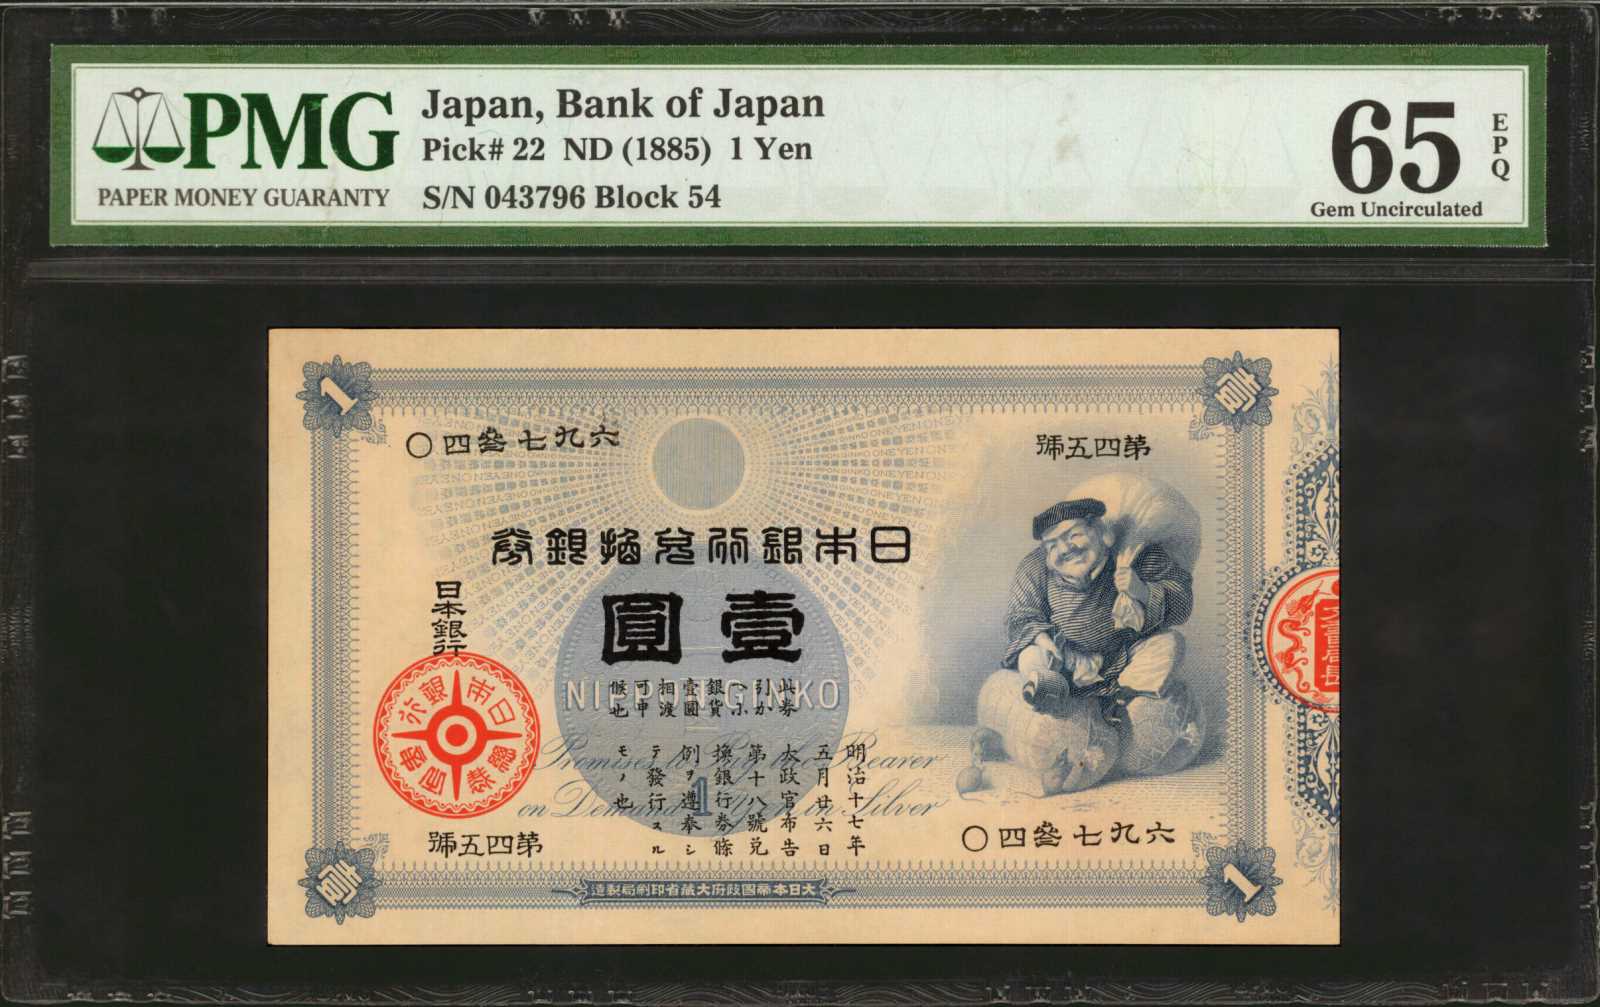 JAPAN. Bank of Japan. 1 Yen, ND (1885). P-22. PMG Gem Uncirculated